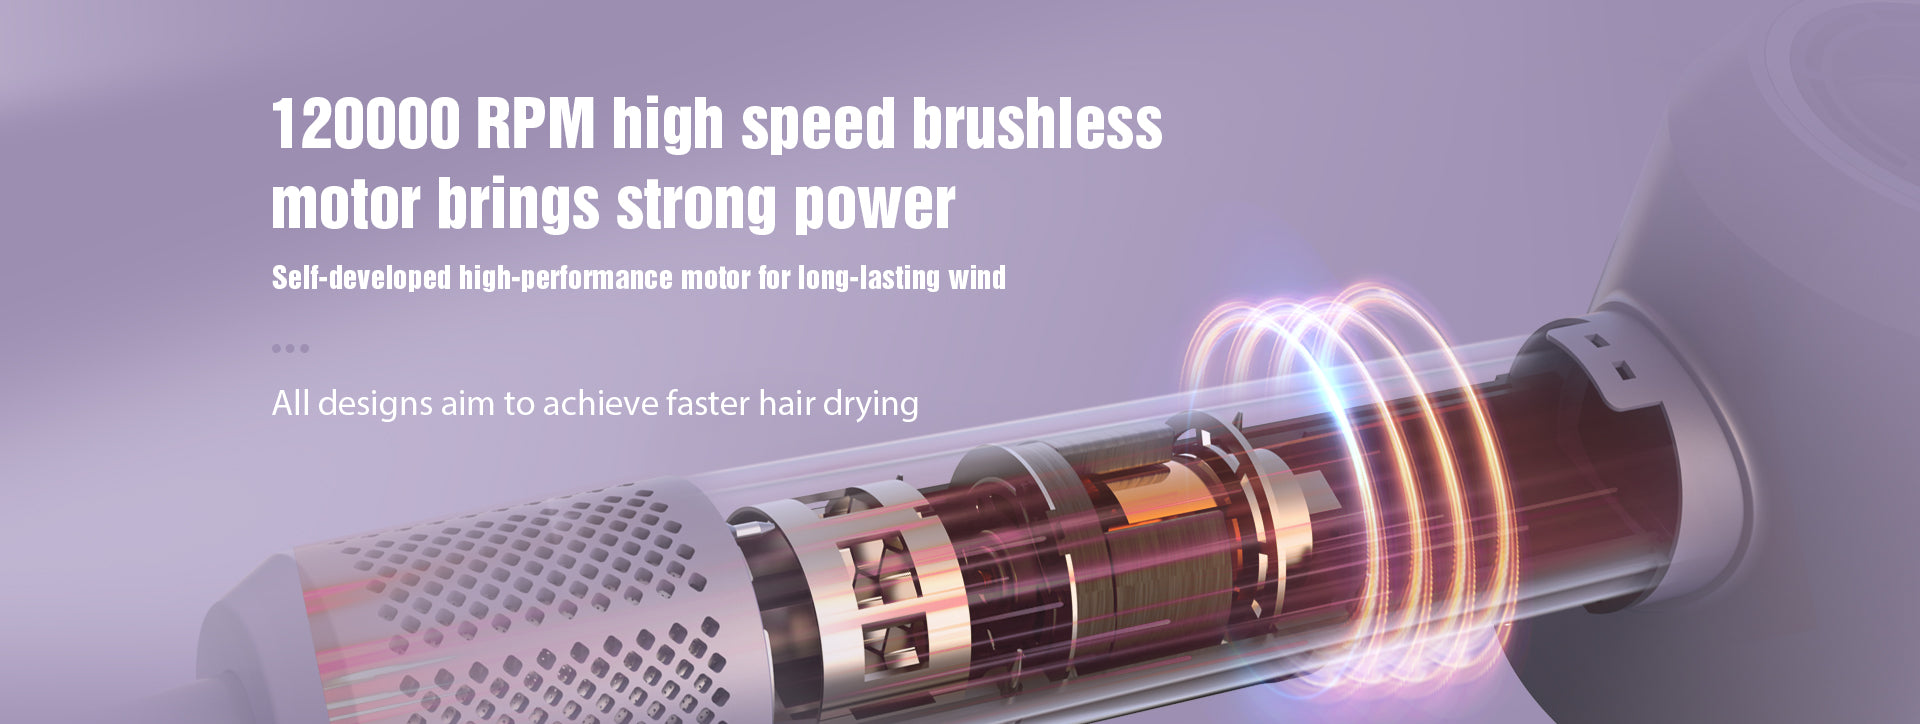 120000_RPM_high_speed_brushlessmotor_brings_strong_power